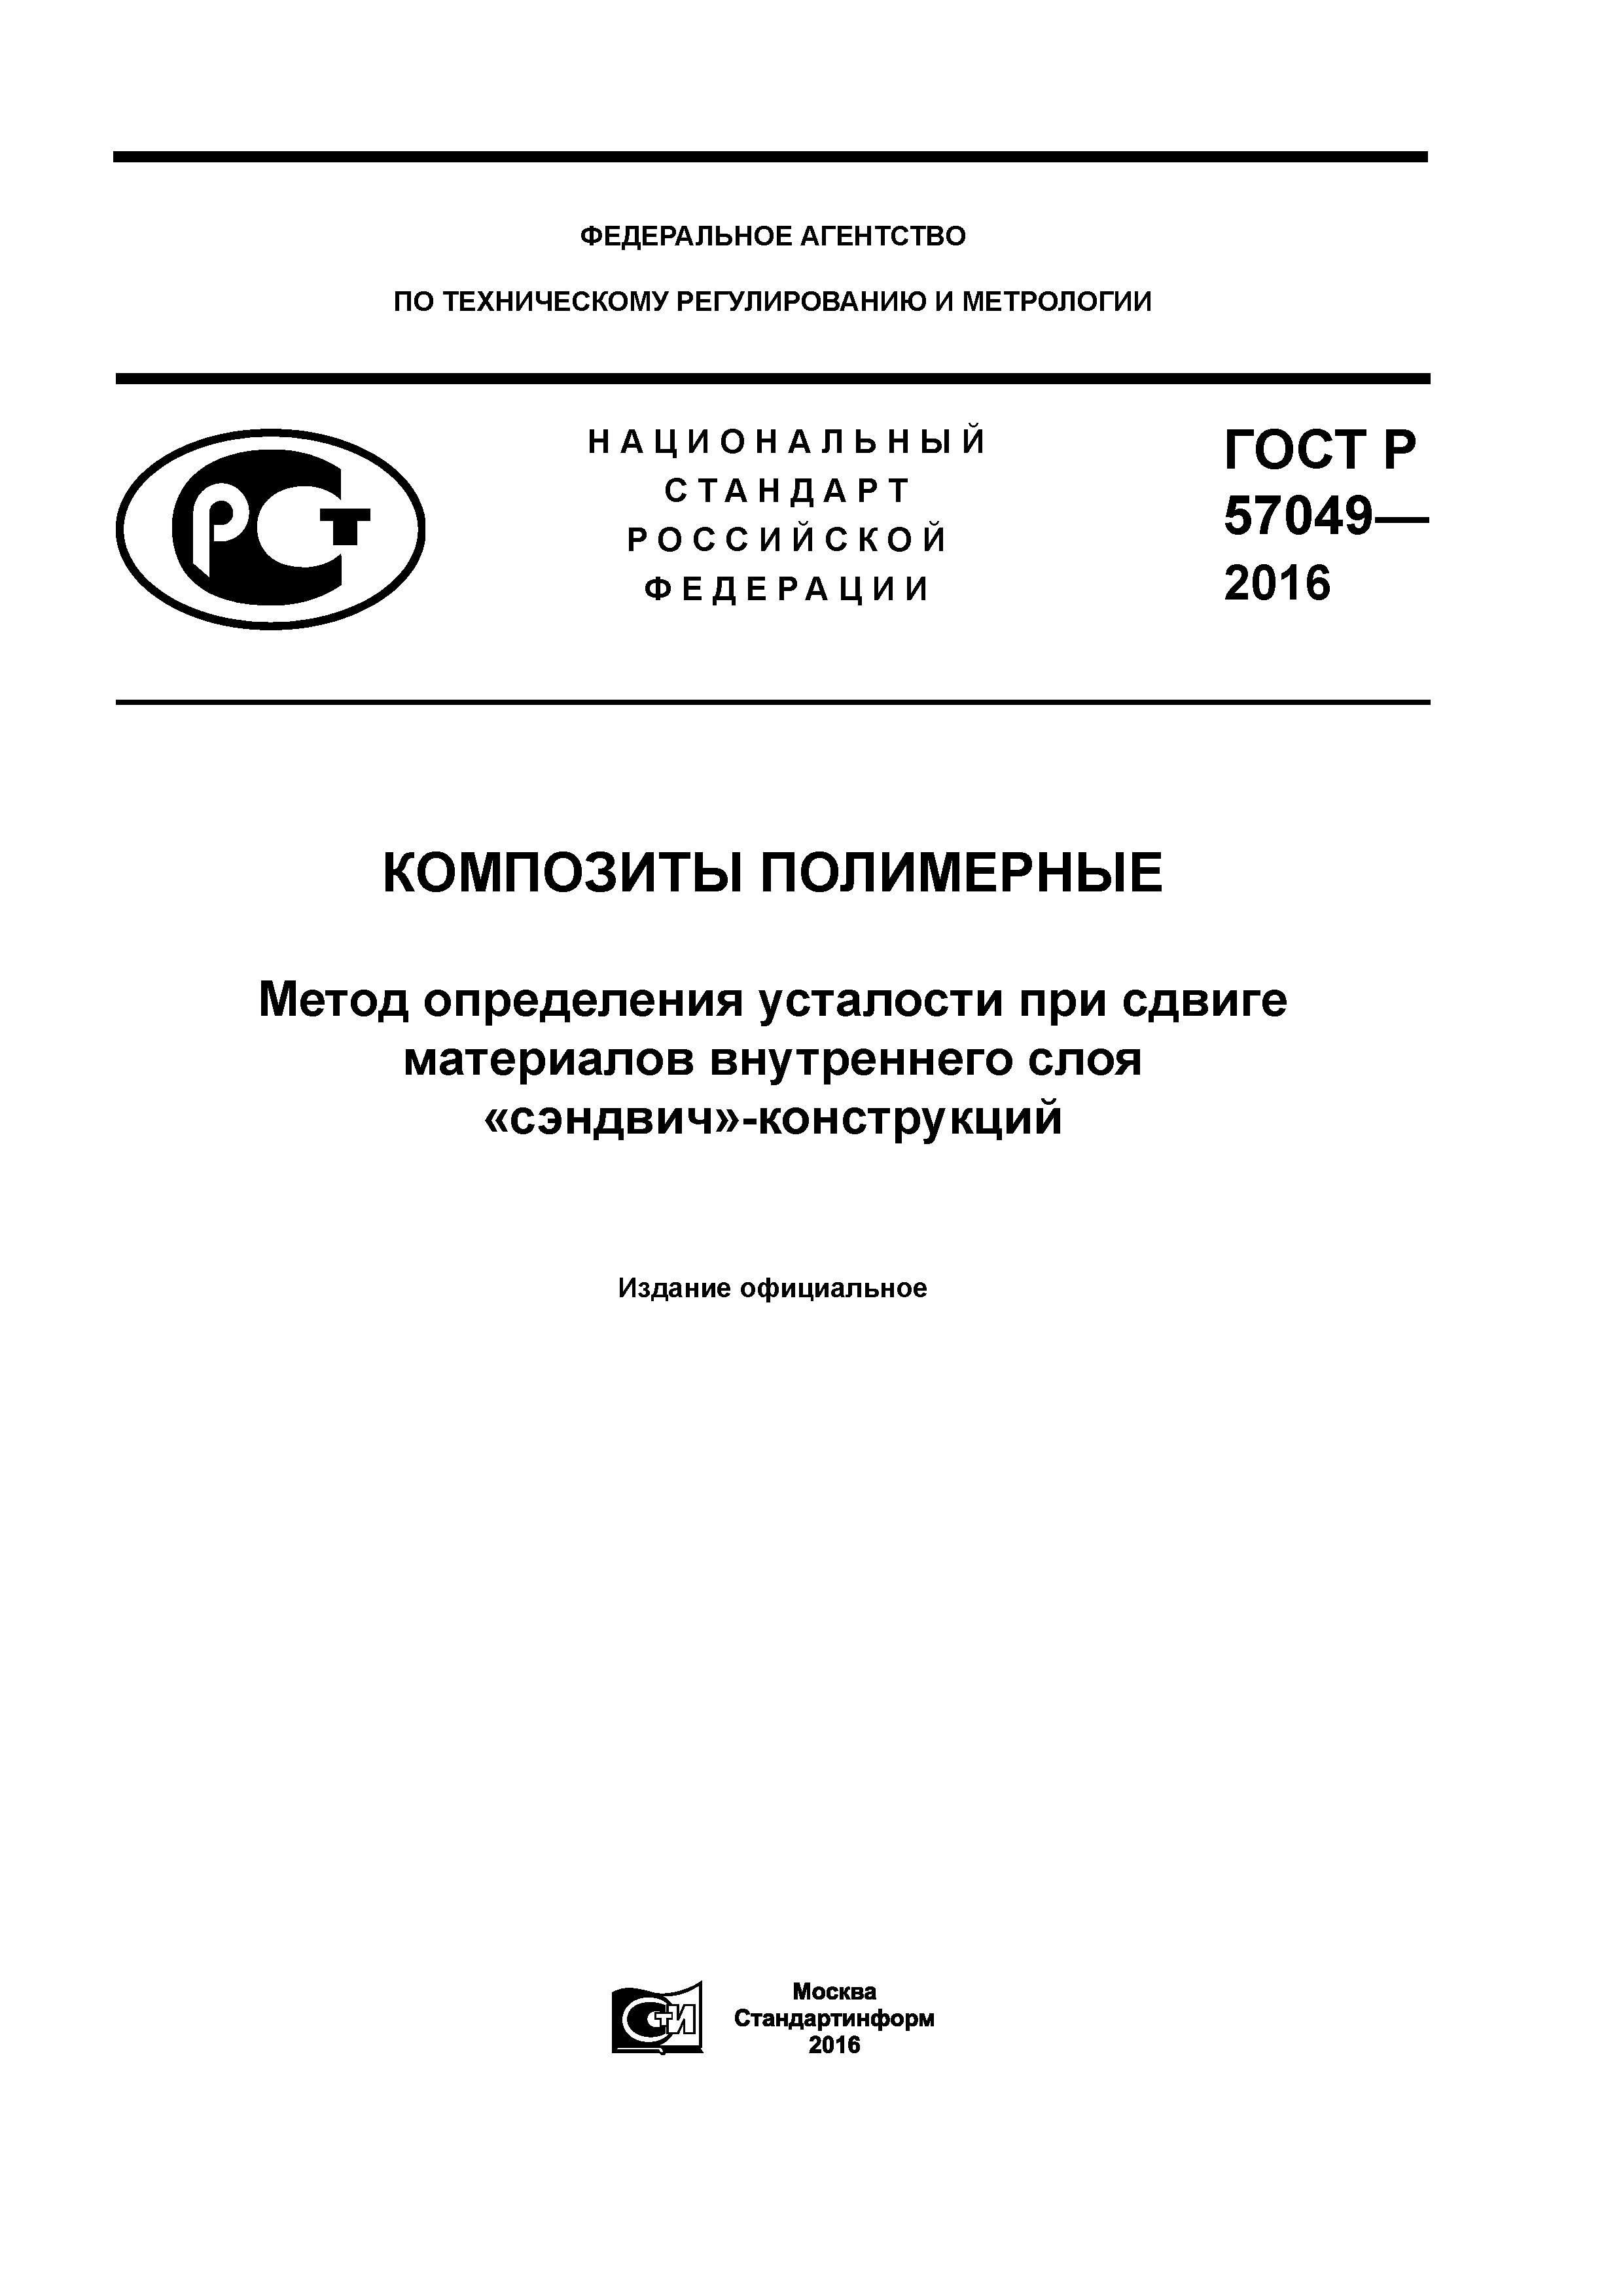 ГОСТ Р 57049-2016